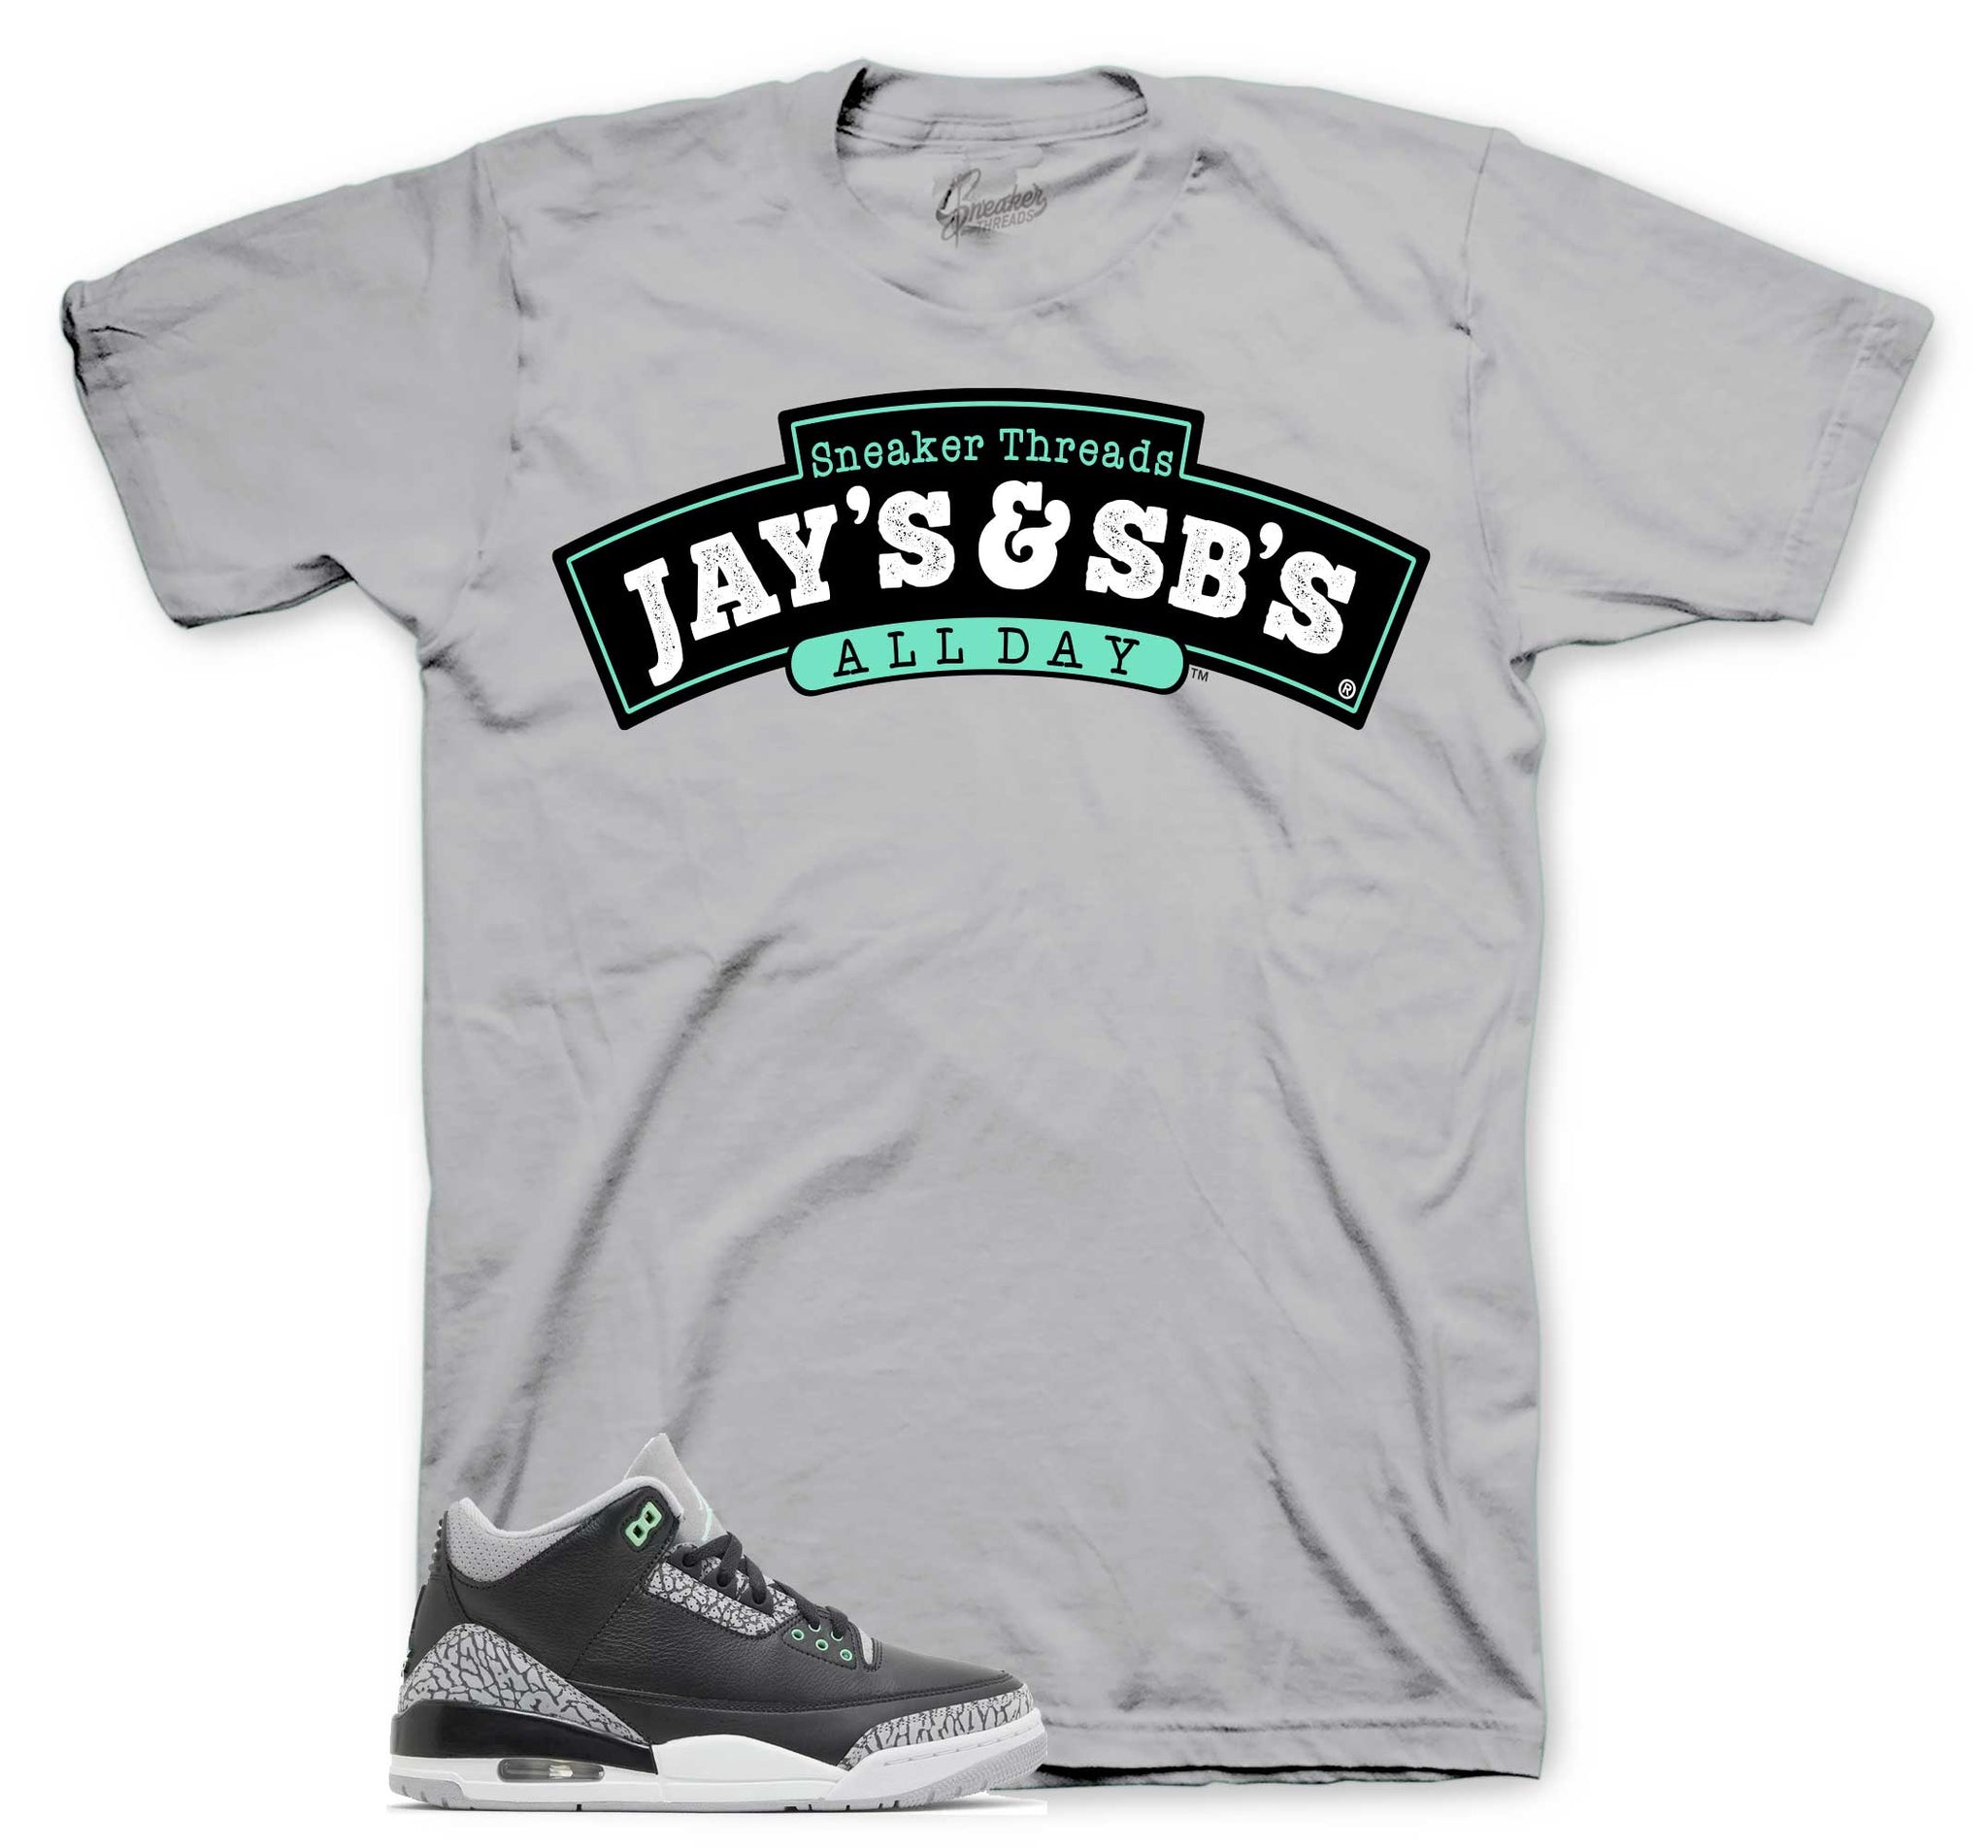 Retro 3 Green Glow Shirt - Jays & Sbs - Black